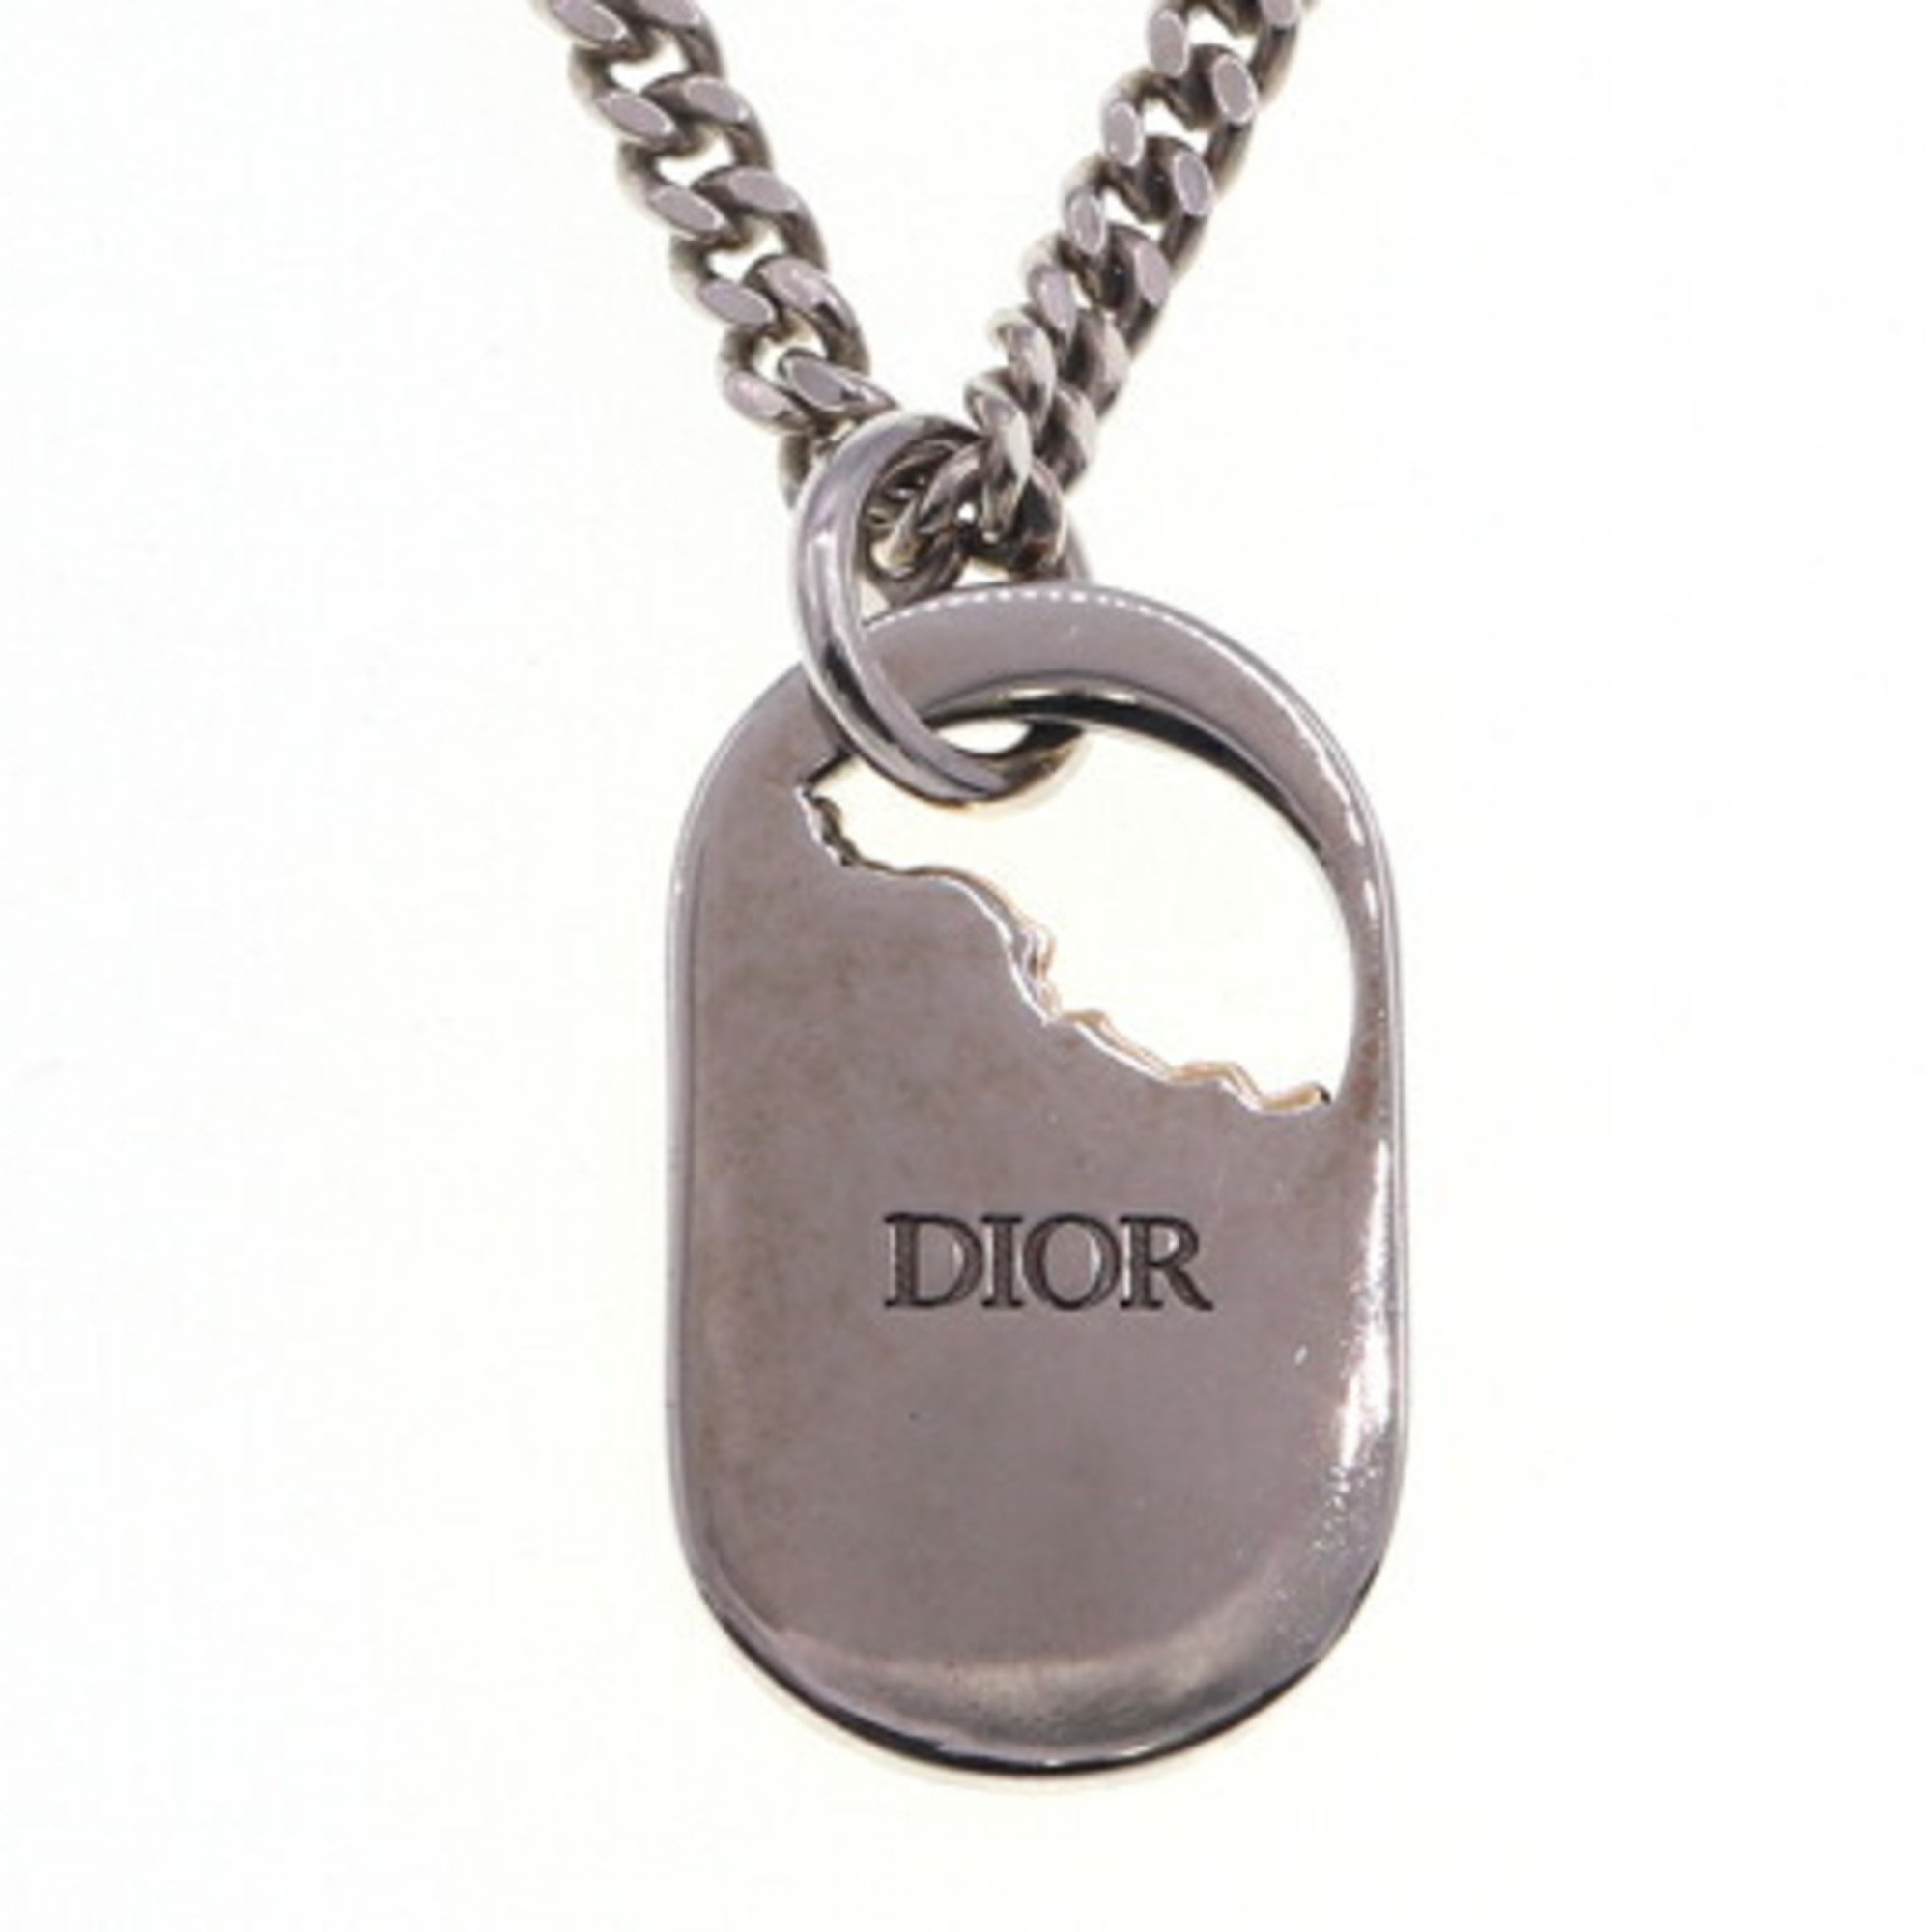 Christian Dior Dior Necklace Silver Gold Metal Choker Pendant CD Ladies Men's DIOR